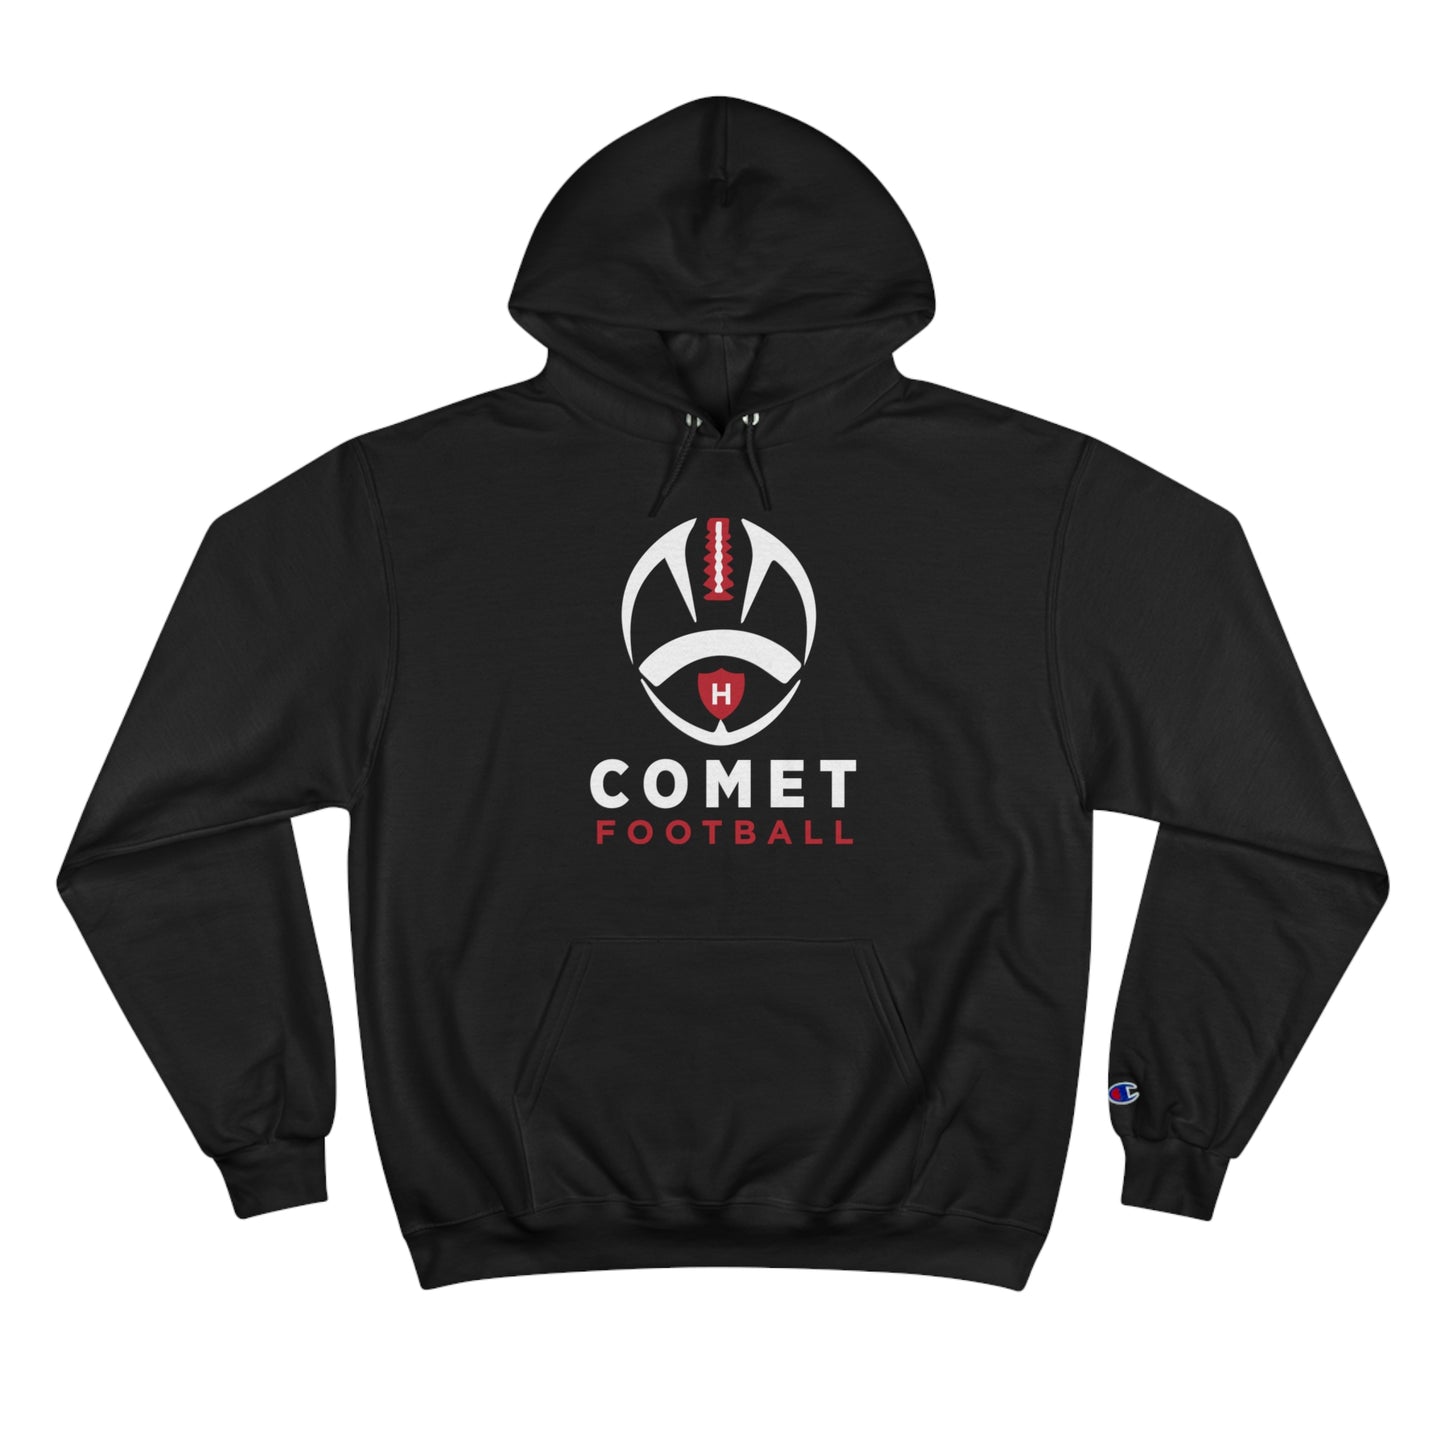 Comet Football - Champion Hoodie